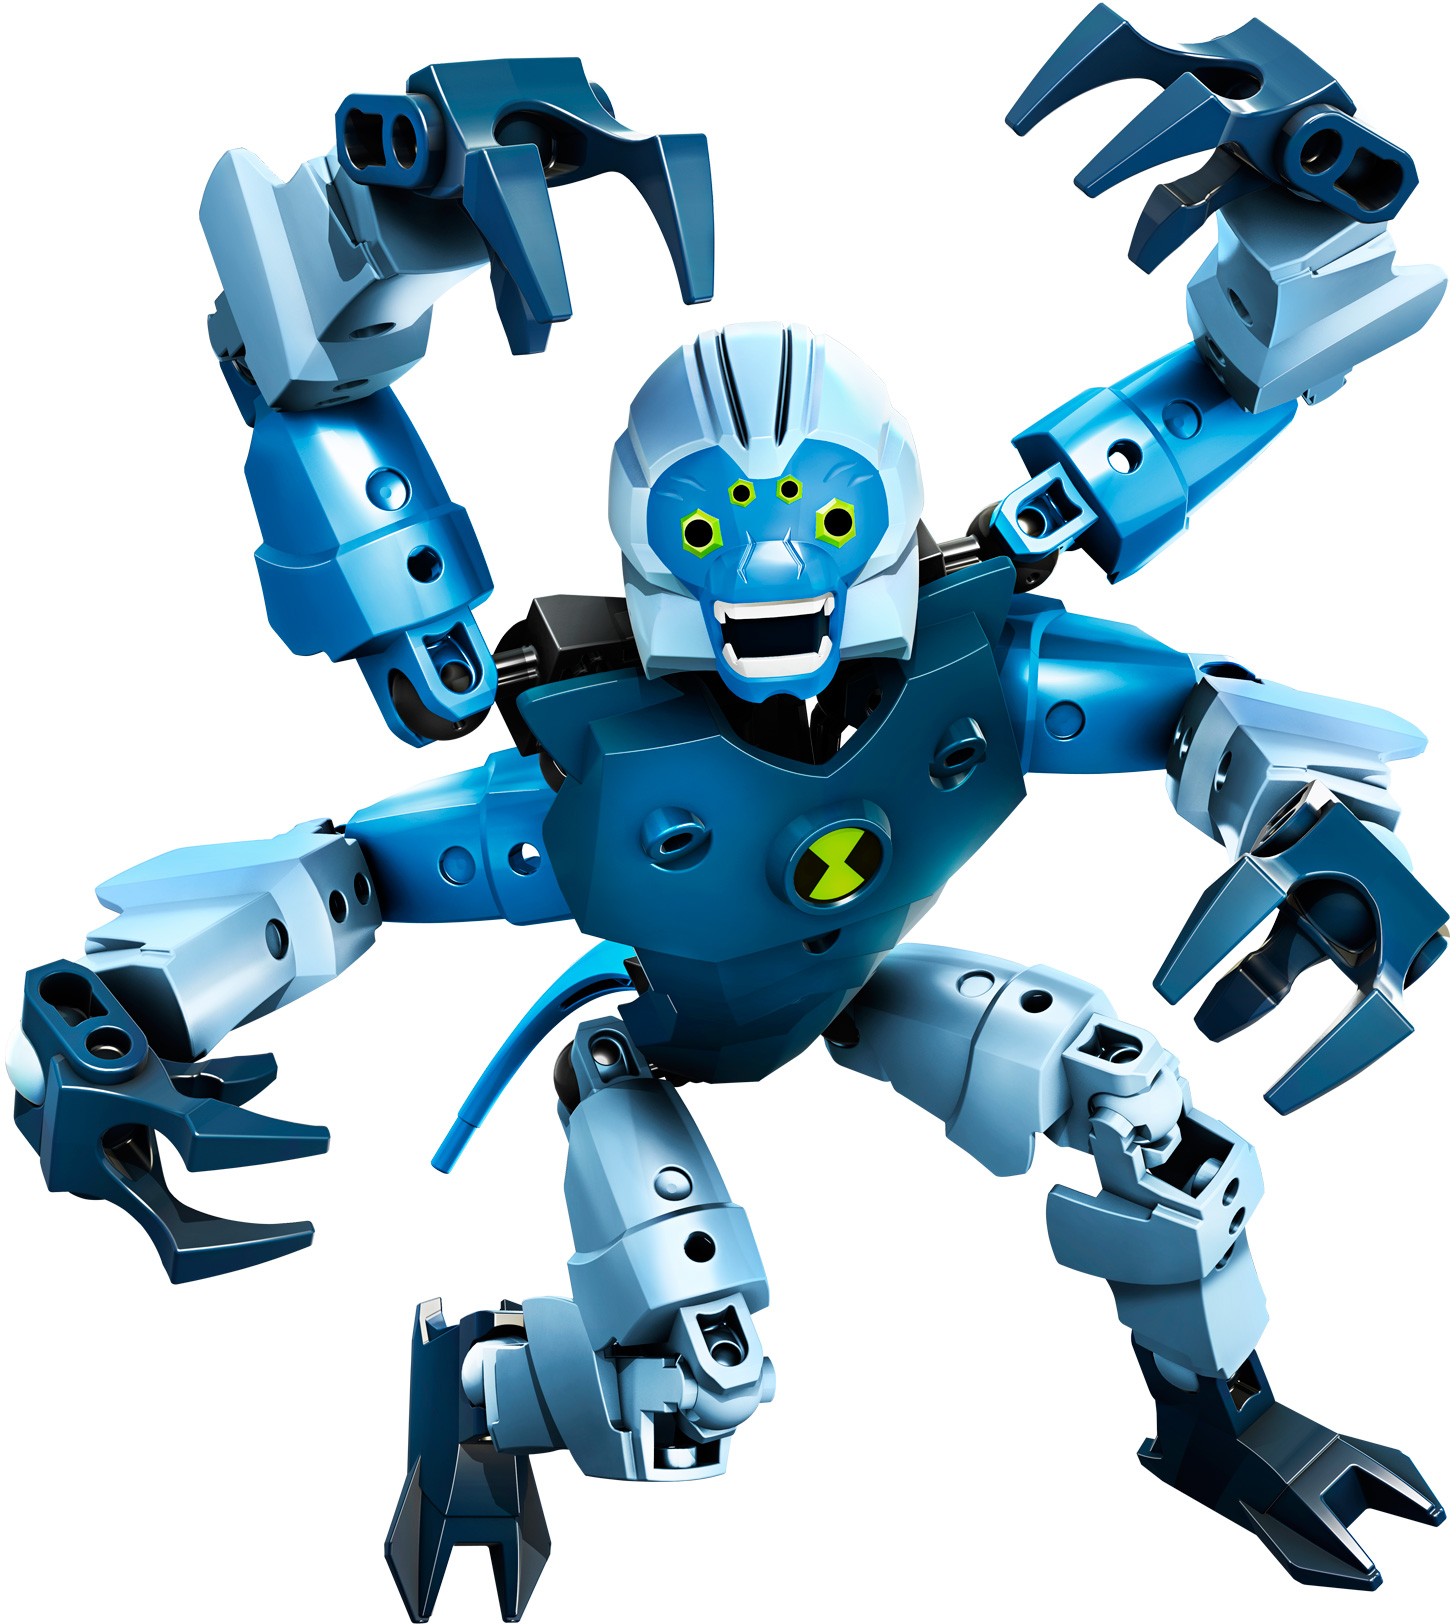 Amazon.com: LEGO Ben 10 Alien Force Jet Ray (8518): Toys & Games